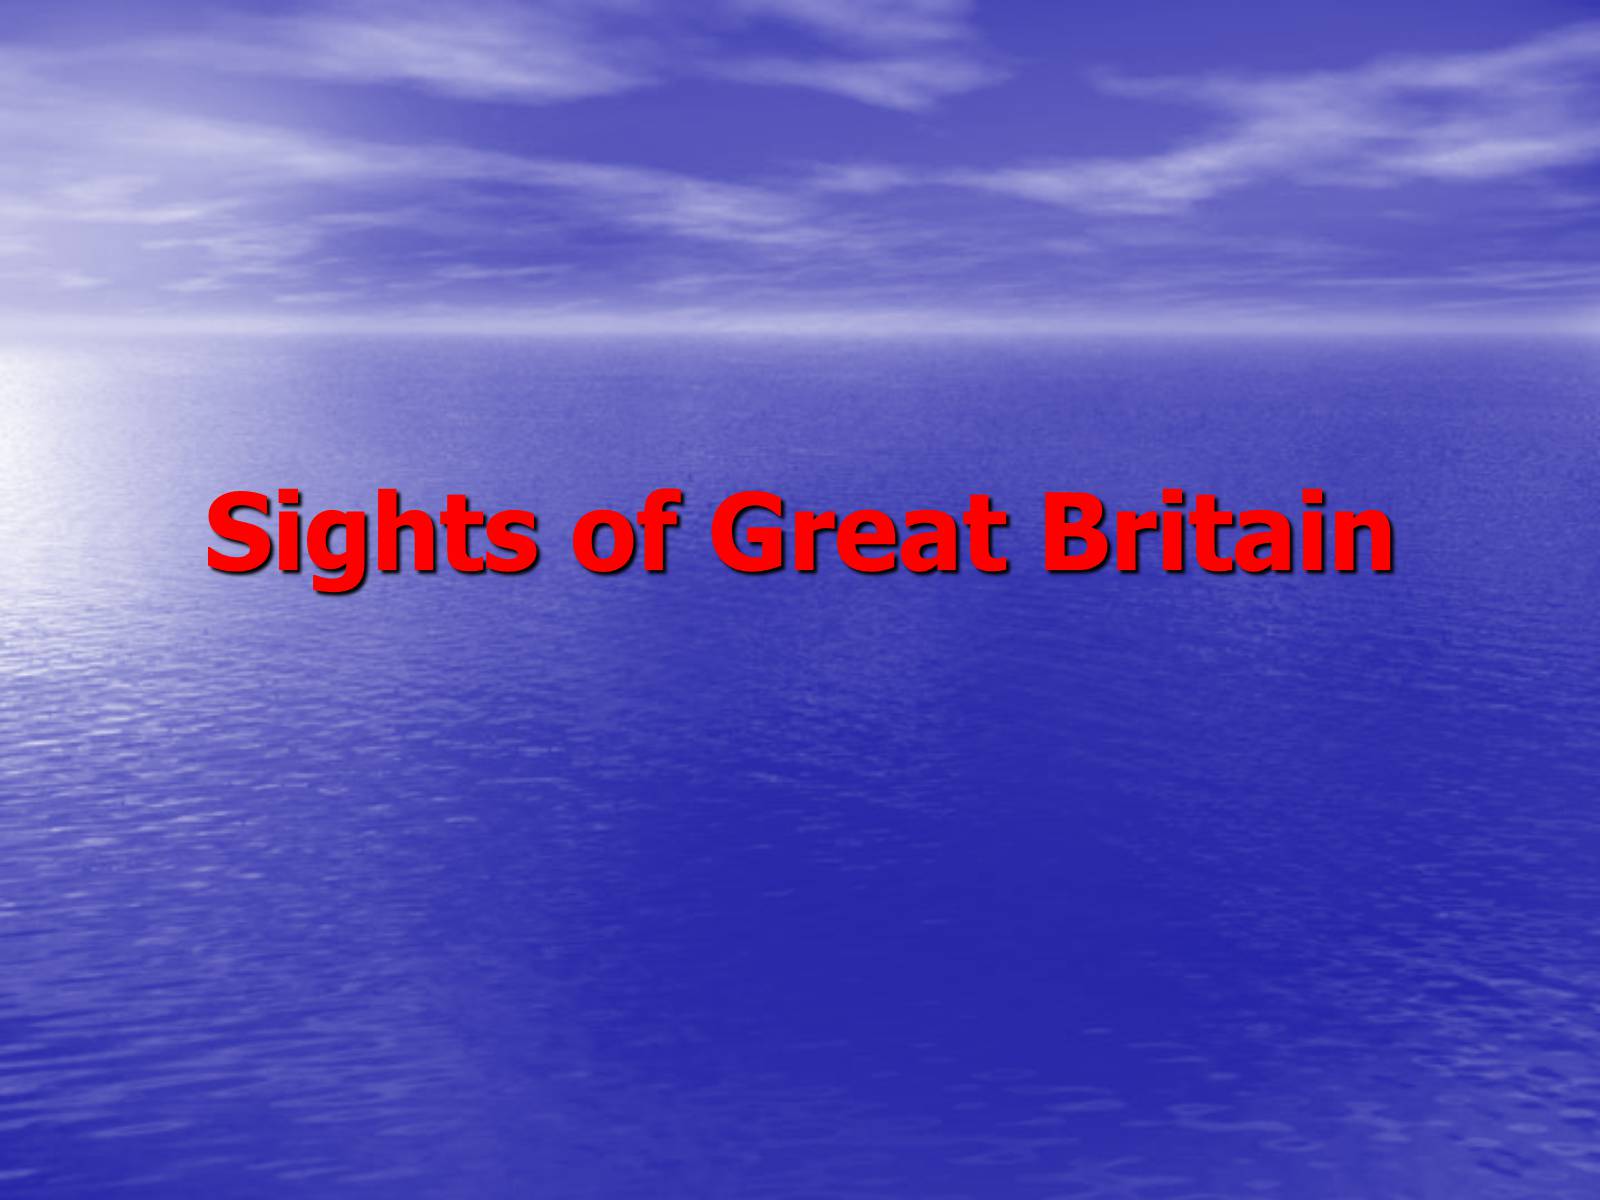 Презентація на тему «Sights of Great Britain» - Слайд #1